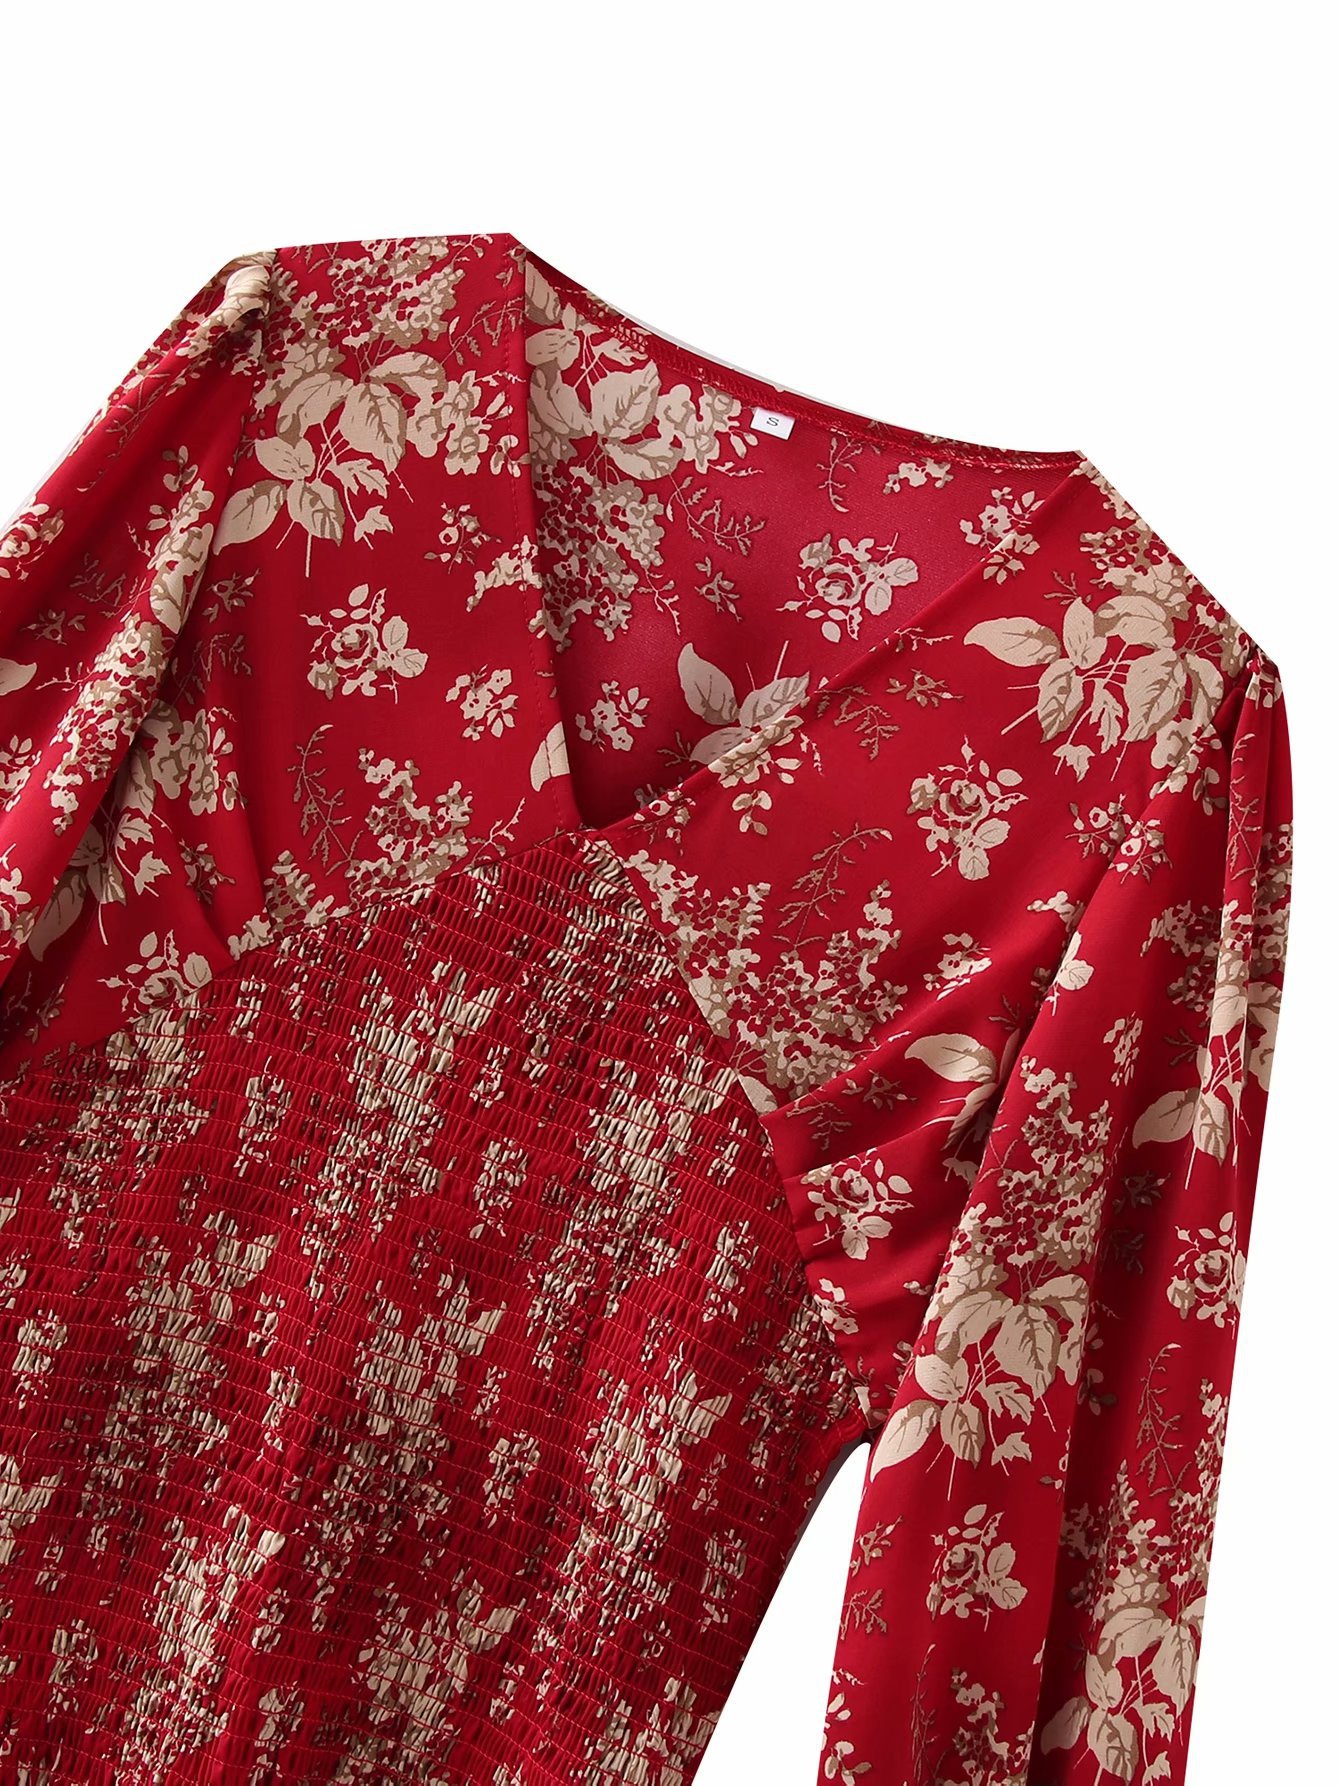 women s print slim dress nihaostyles wholesale clothing NSAM78508